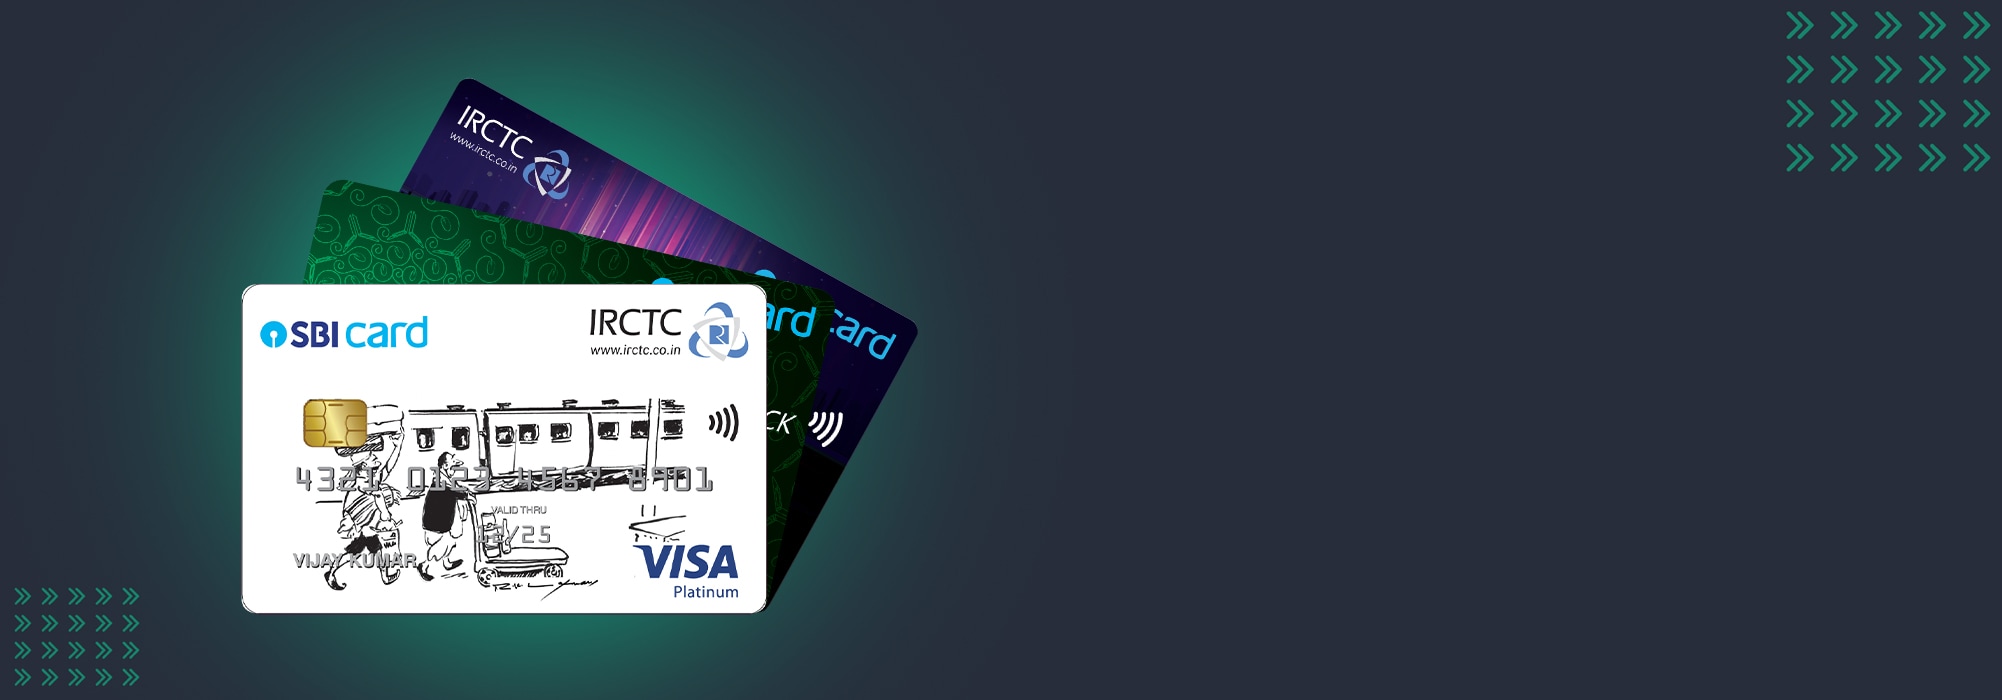 SBI Credit Card SimplySAVE Benefits